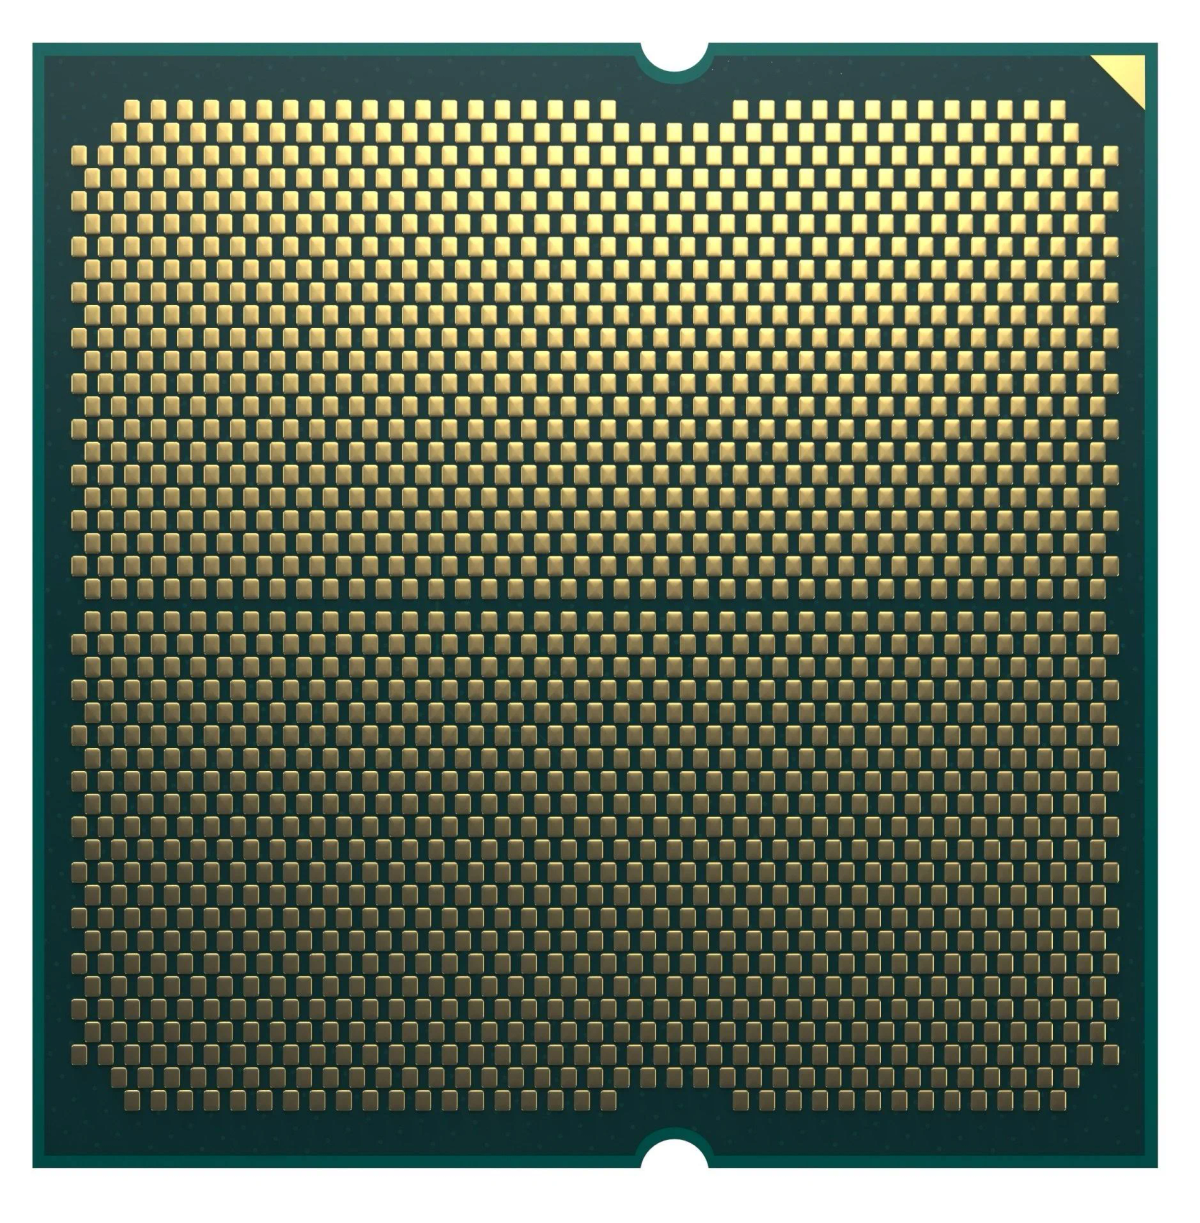 AMD Ryzen Prozessor, Mehrfarbig 7950X 9